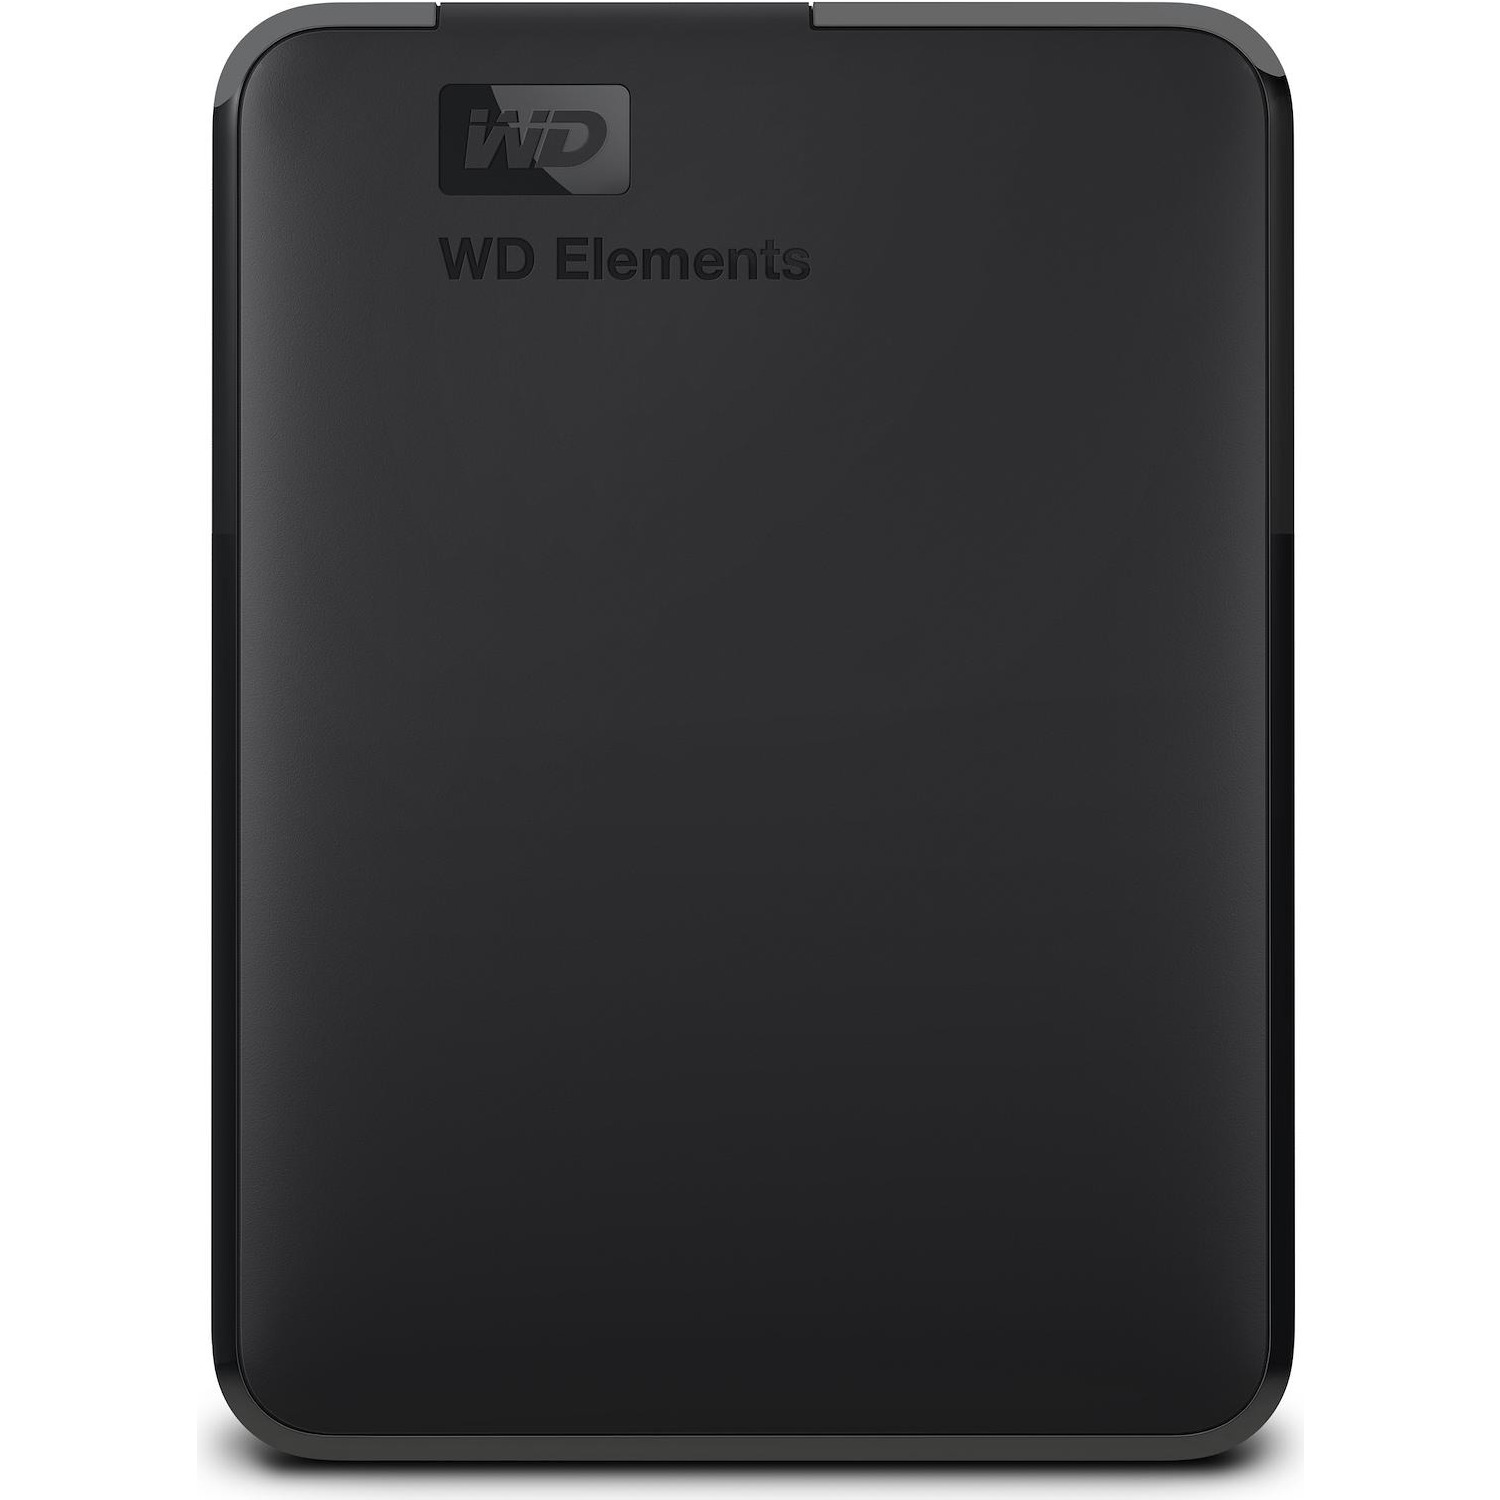 Immagine per HD Western Digital 2,5" USB 3.0 4TB nero da DIMOStore